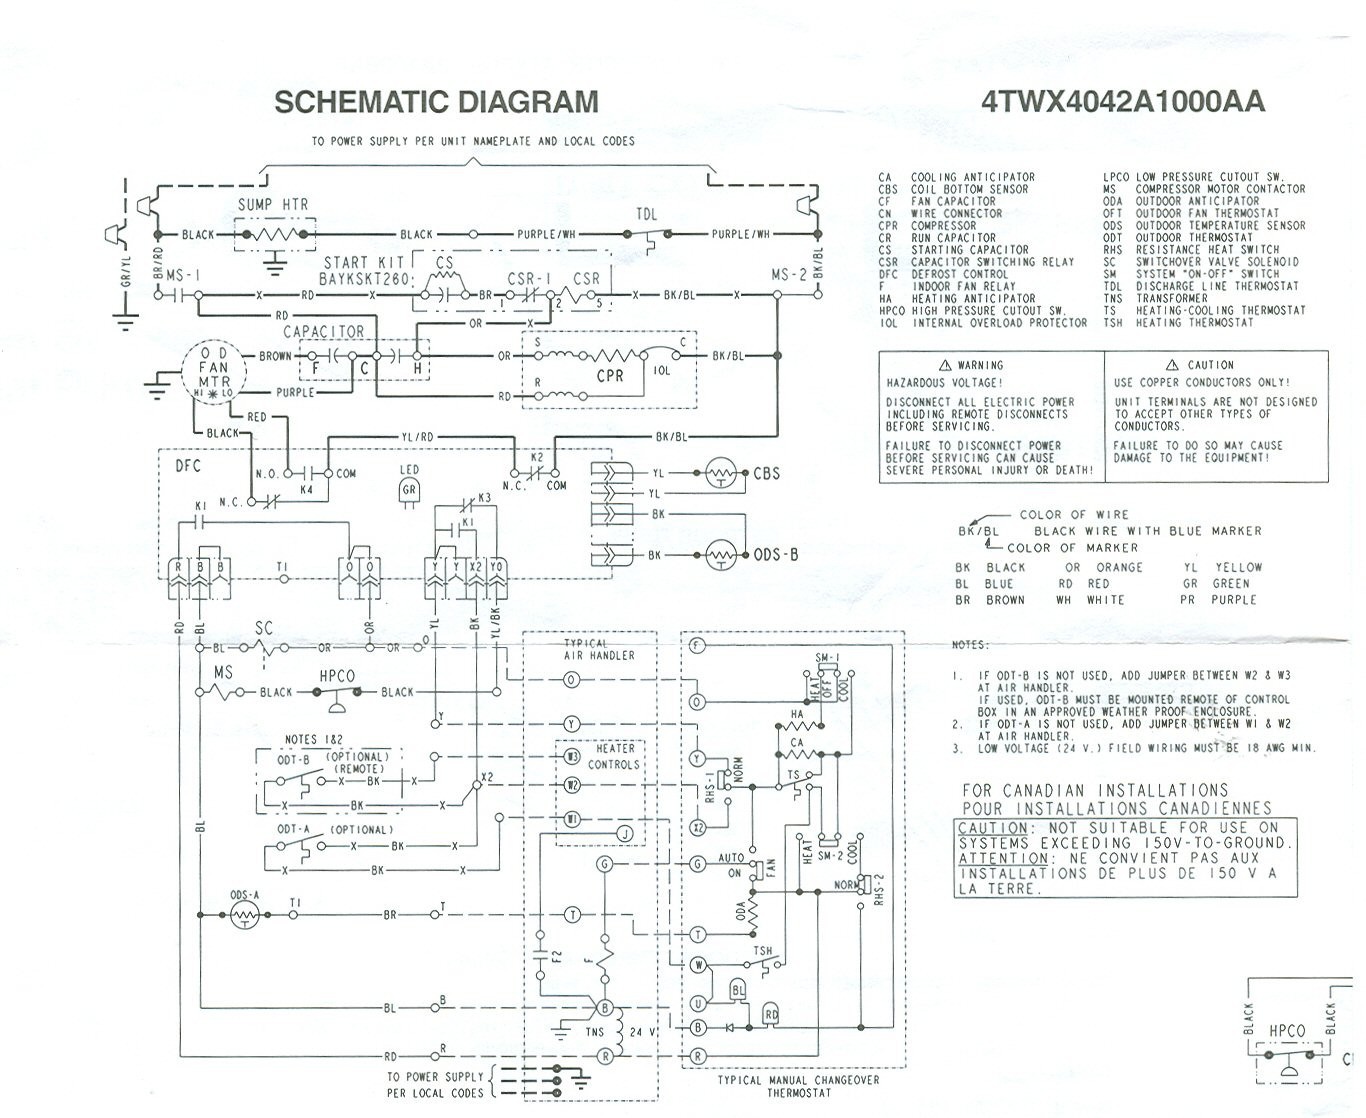 Trane Wiring Diagram Ac Diagrams Furnace Inside Webtor Me Pleasing